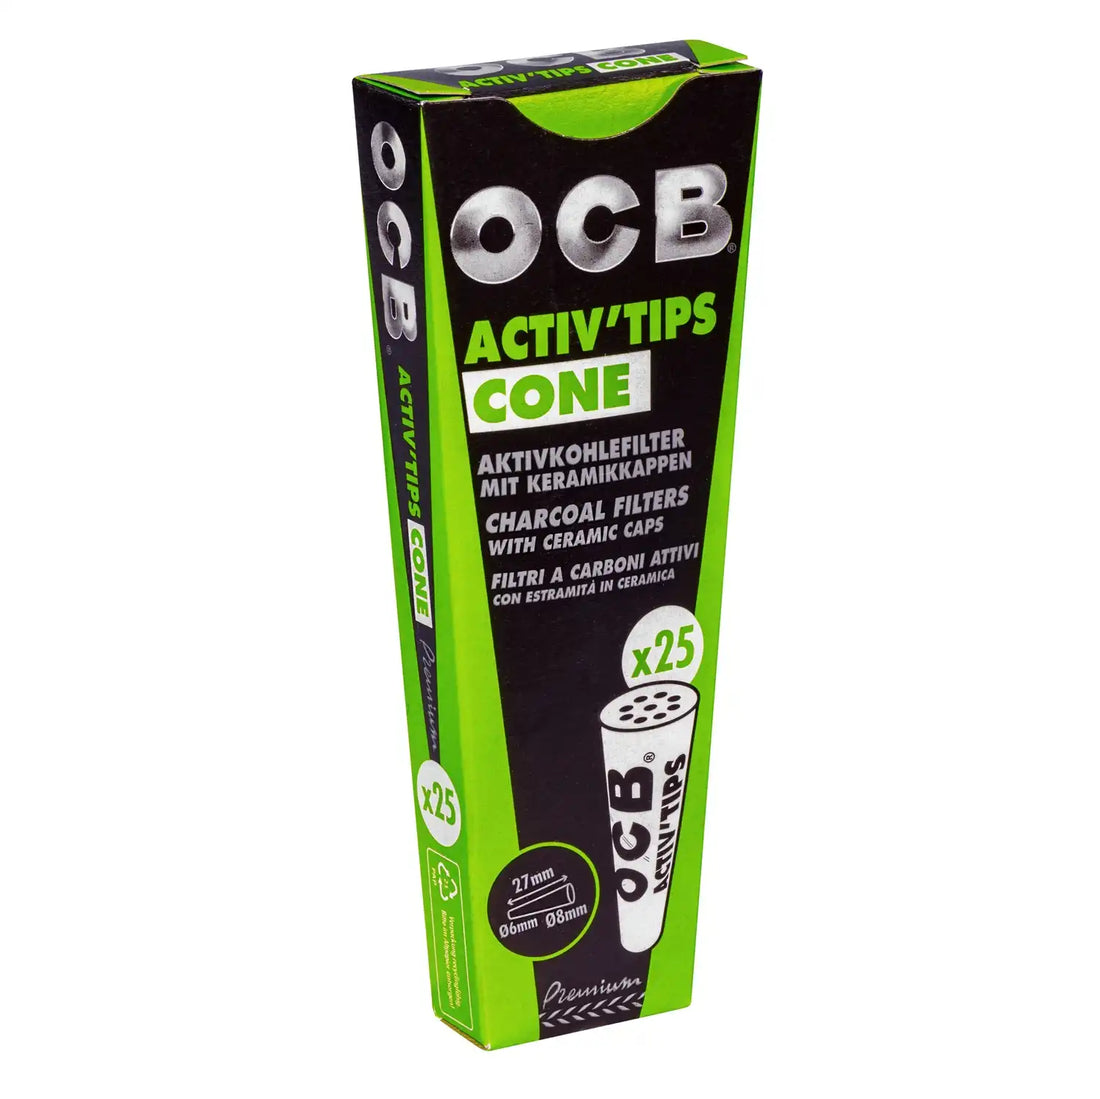 OCB Active Tips Cone 25 Stueck